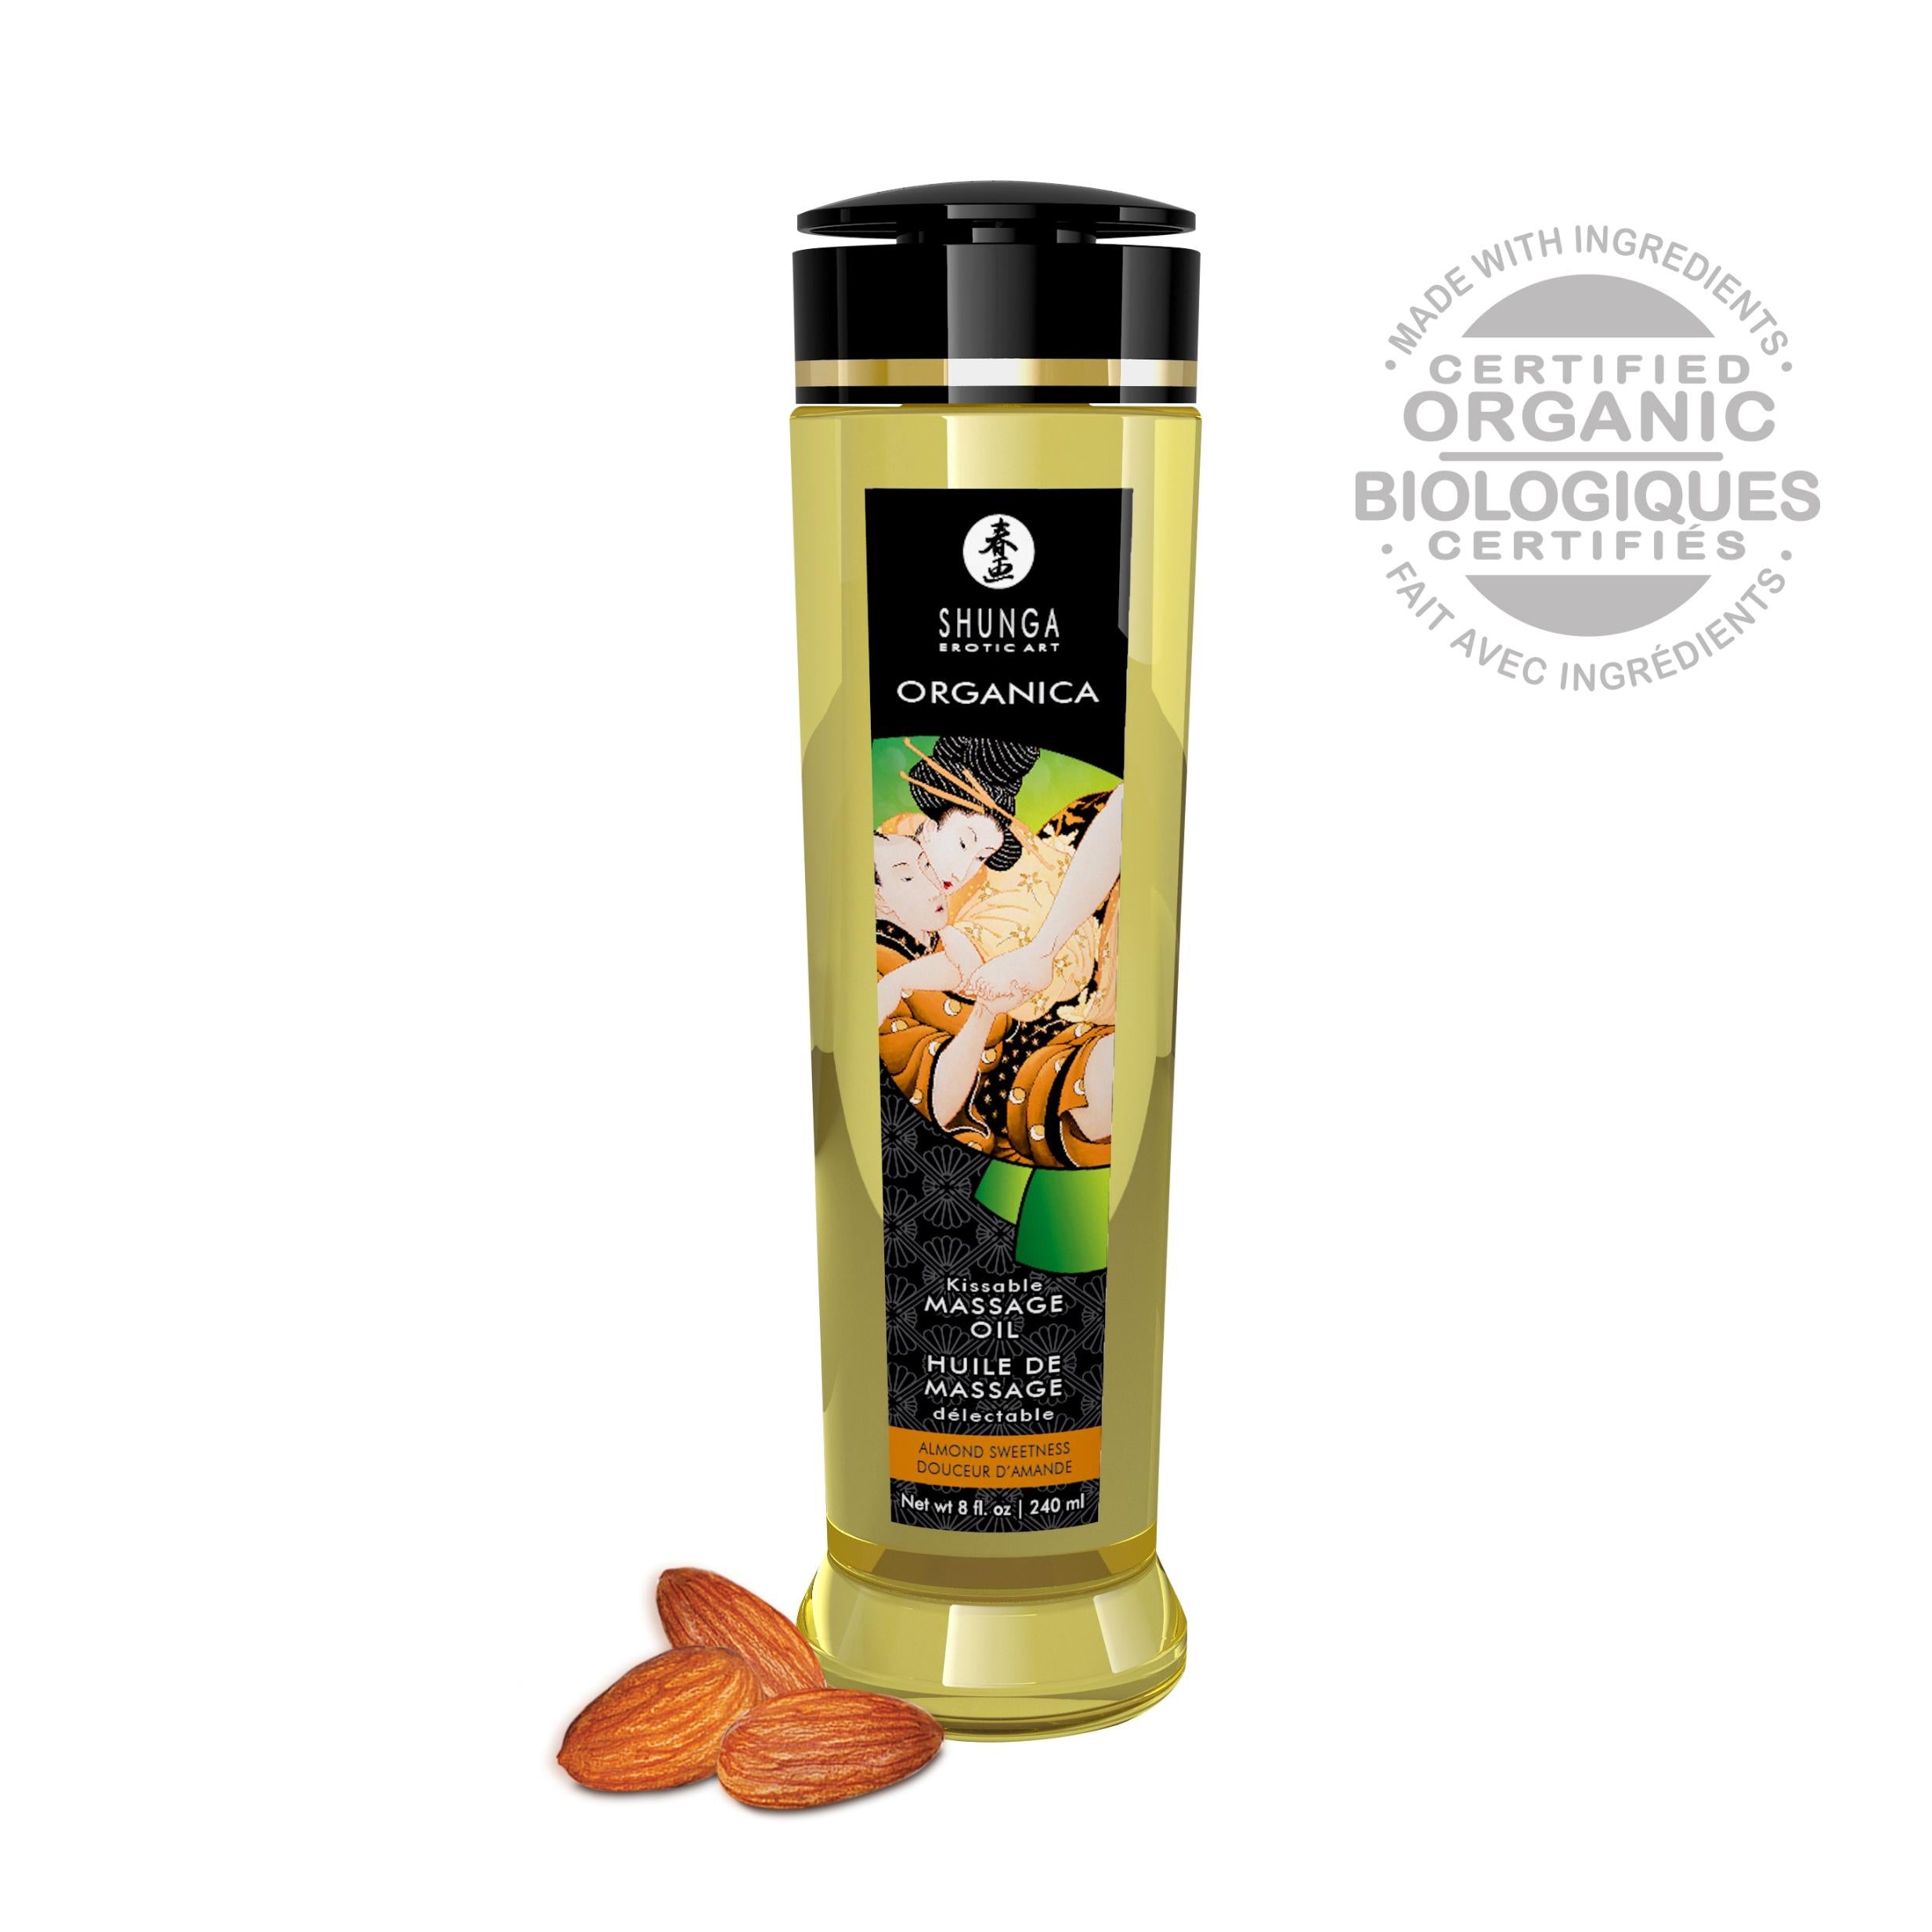 Organica Massage Oils Almond Sweetness